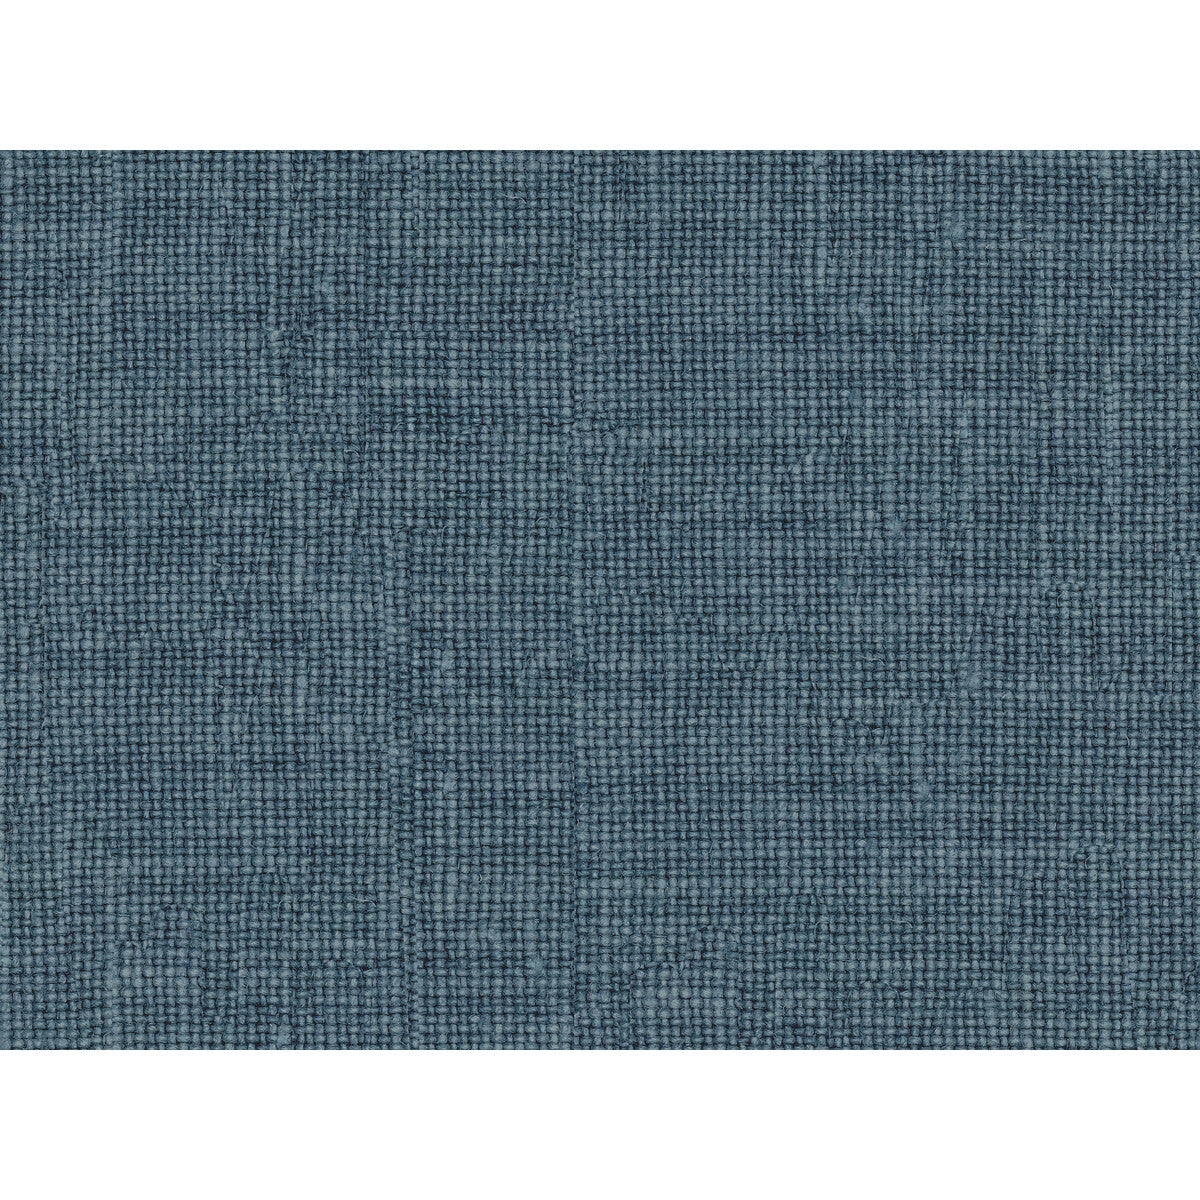 Kravet Basics fabric in 33767-5 color - pattern 33767.5.0 - by Kravet Basics in the Gis collection